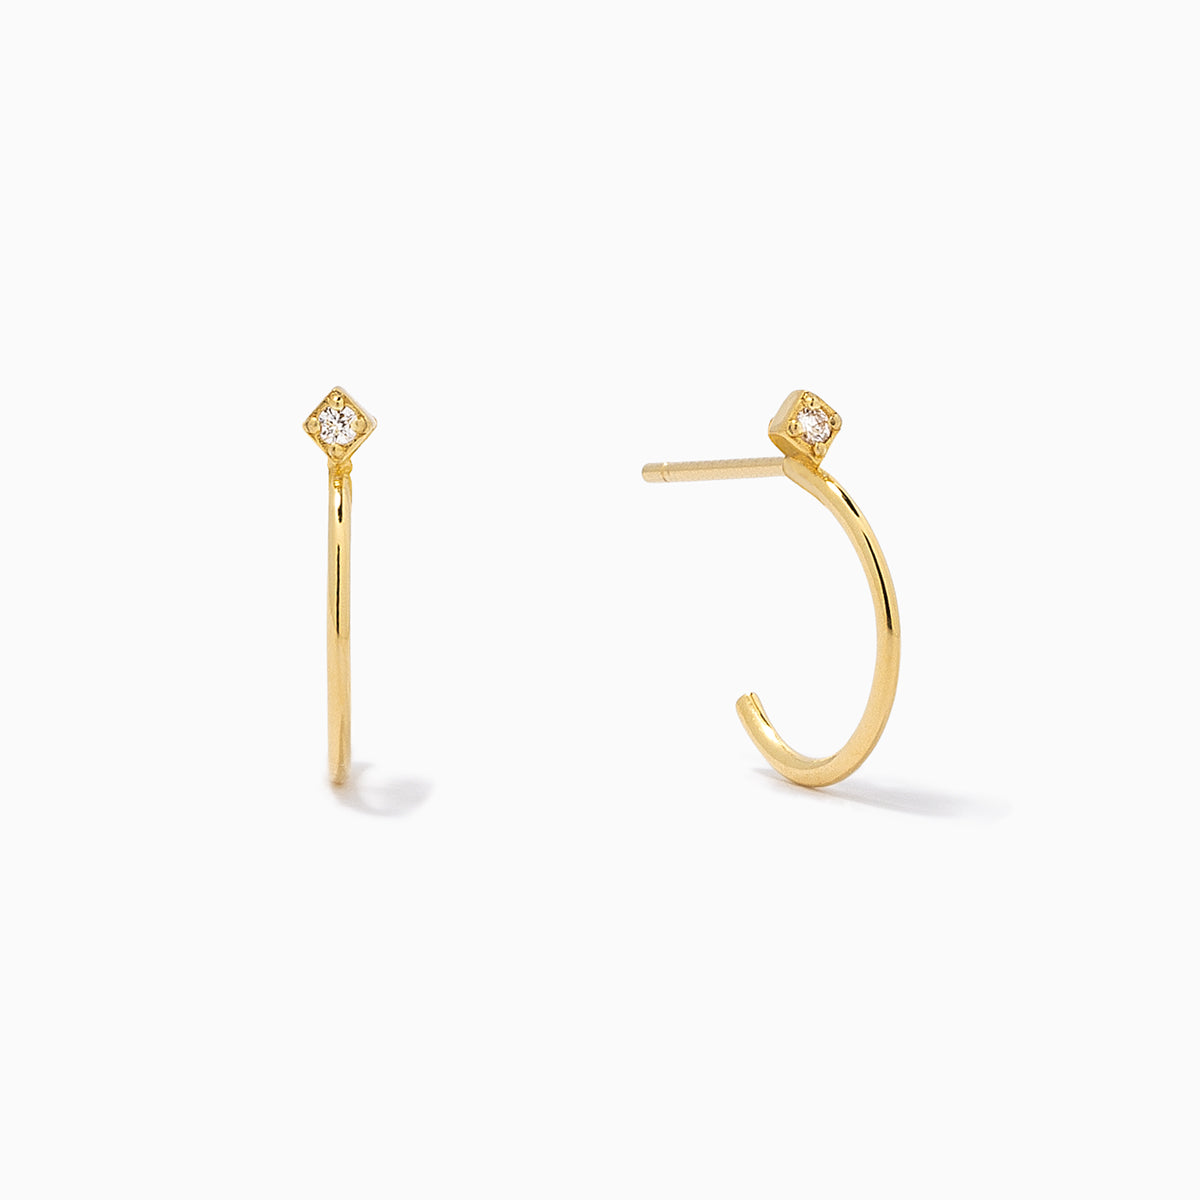 Luxurious Touch Vermeil Hoop Earrings | Gold Vermeil | Product Detail Image | Uncommon James